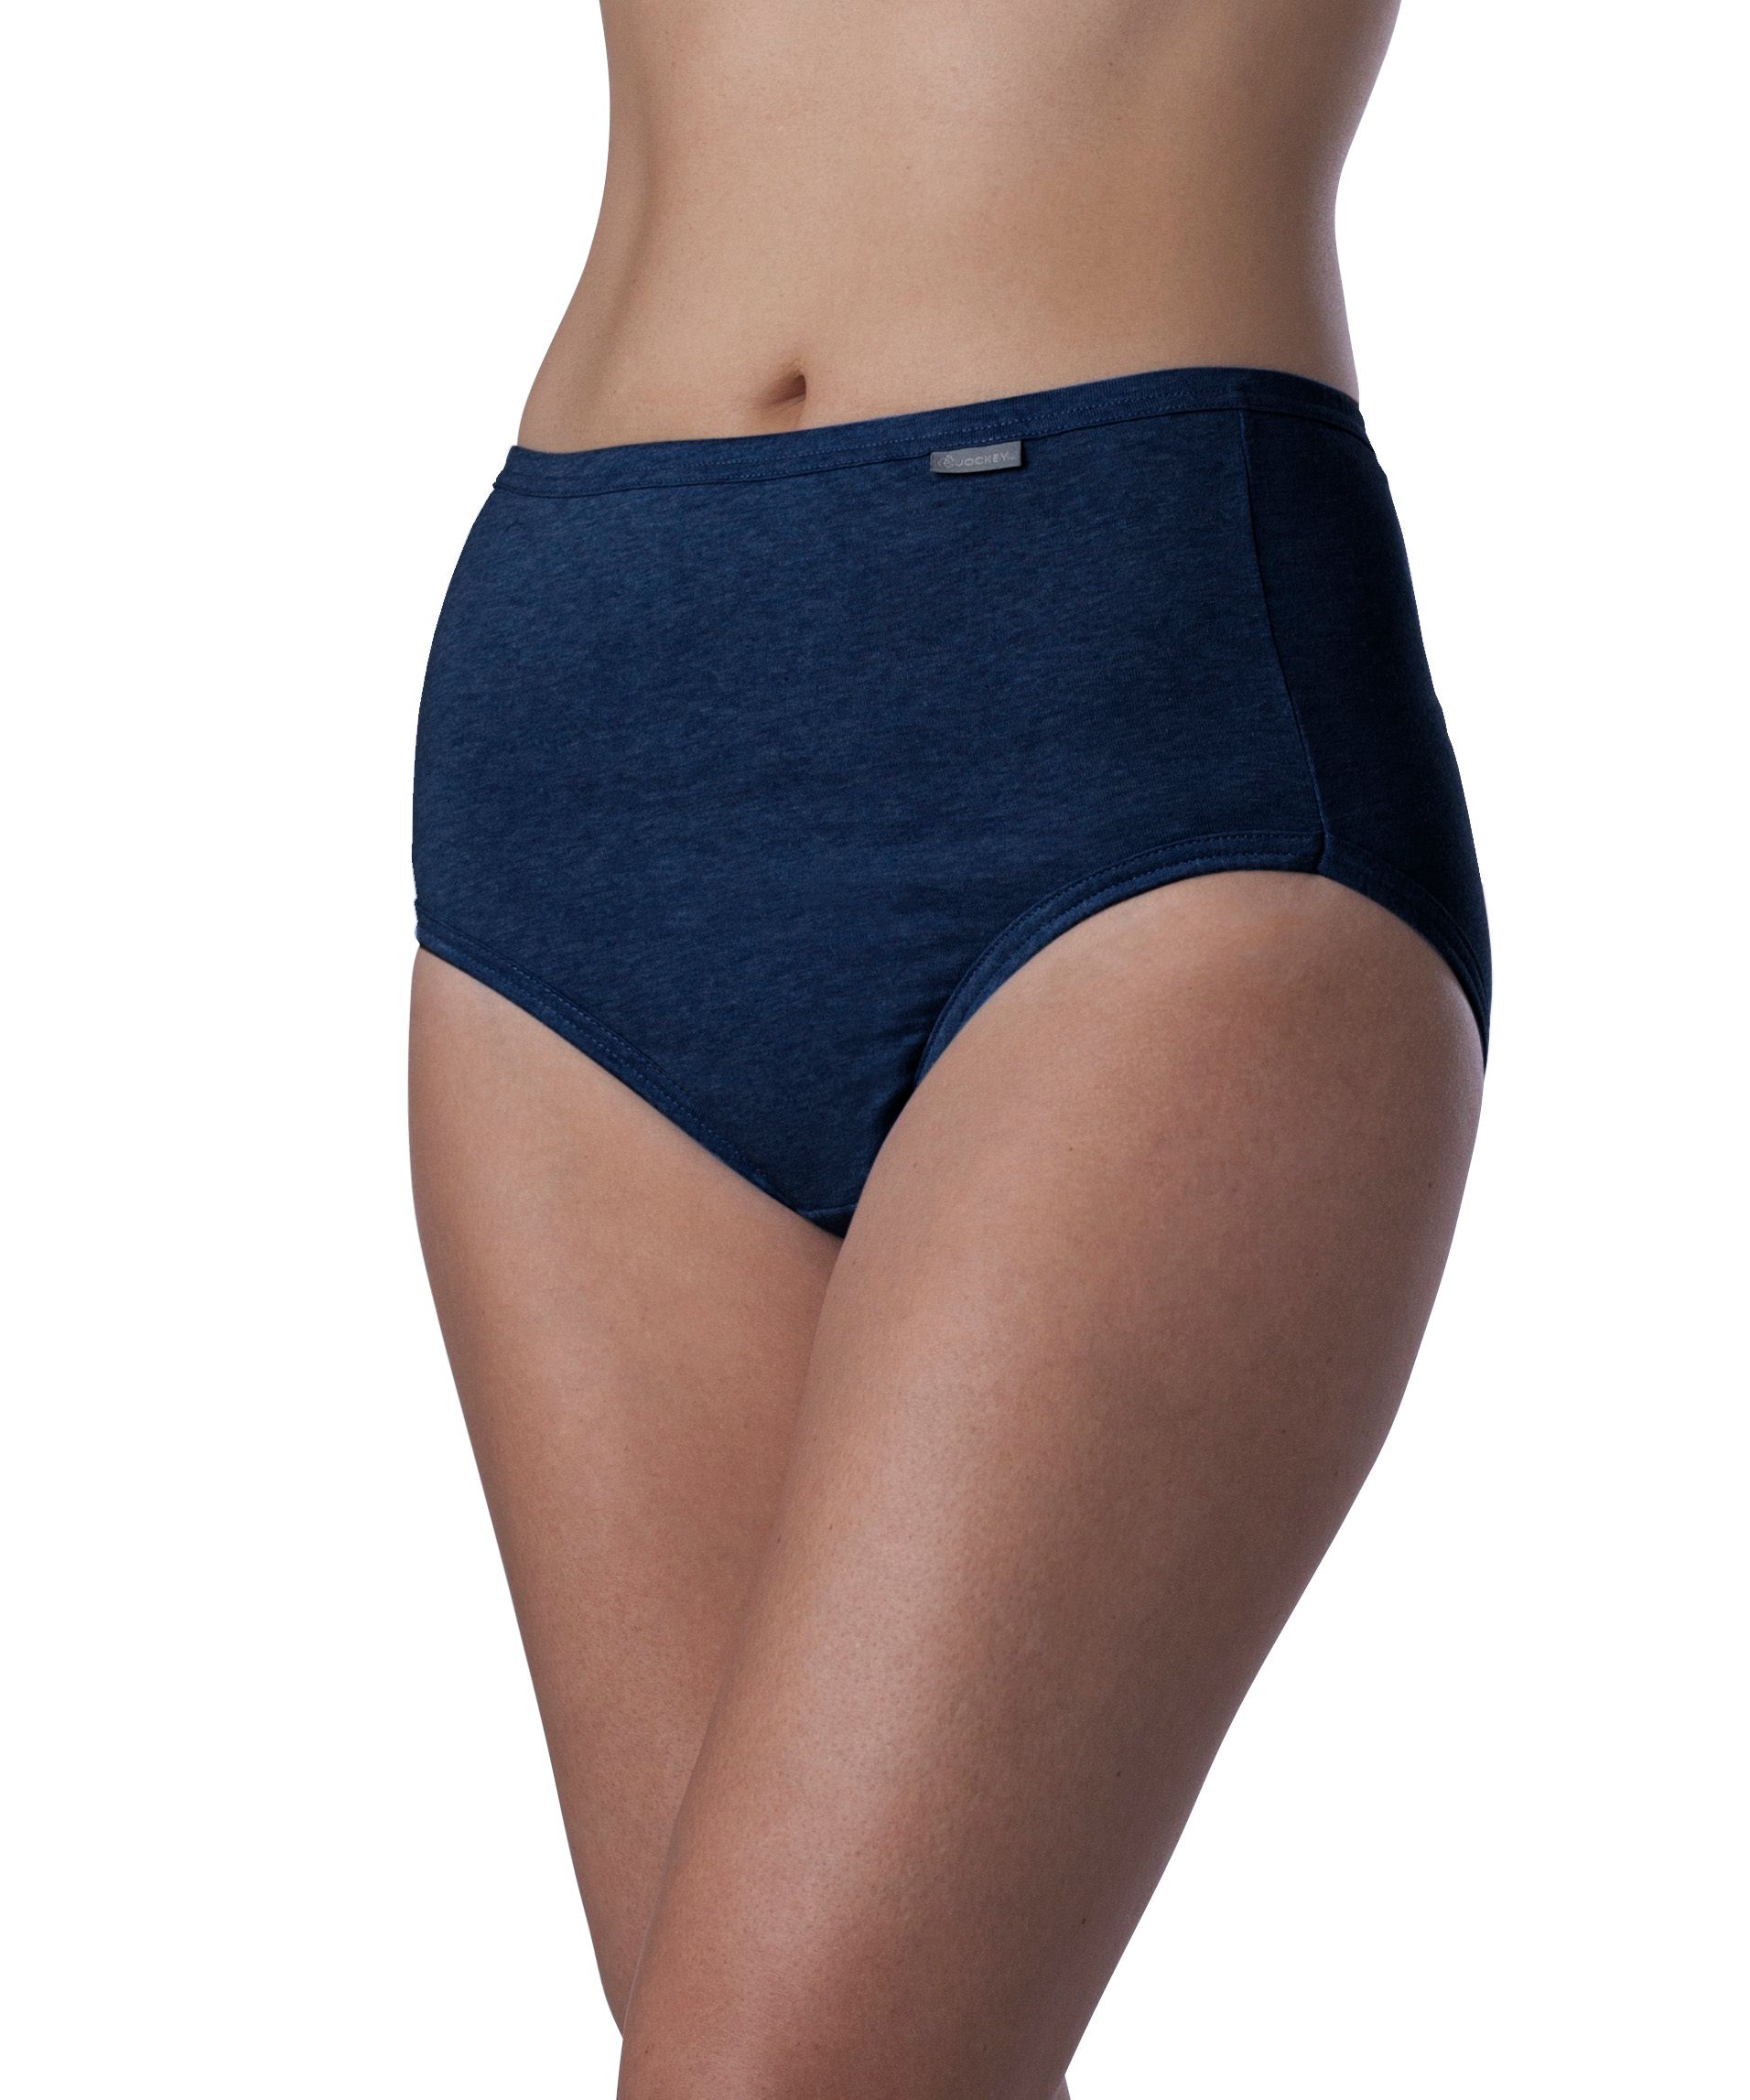 Jockey Women's Underwear Plus Size Elance French Cut - 3 Pack Size 10 (3XL)